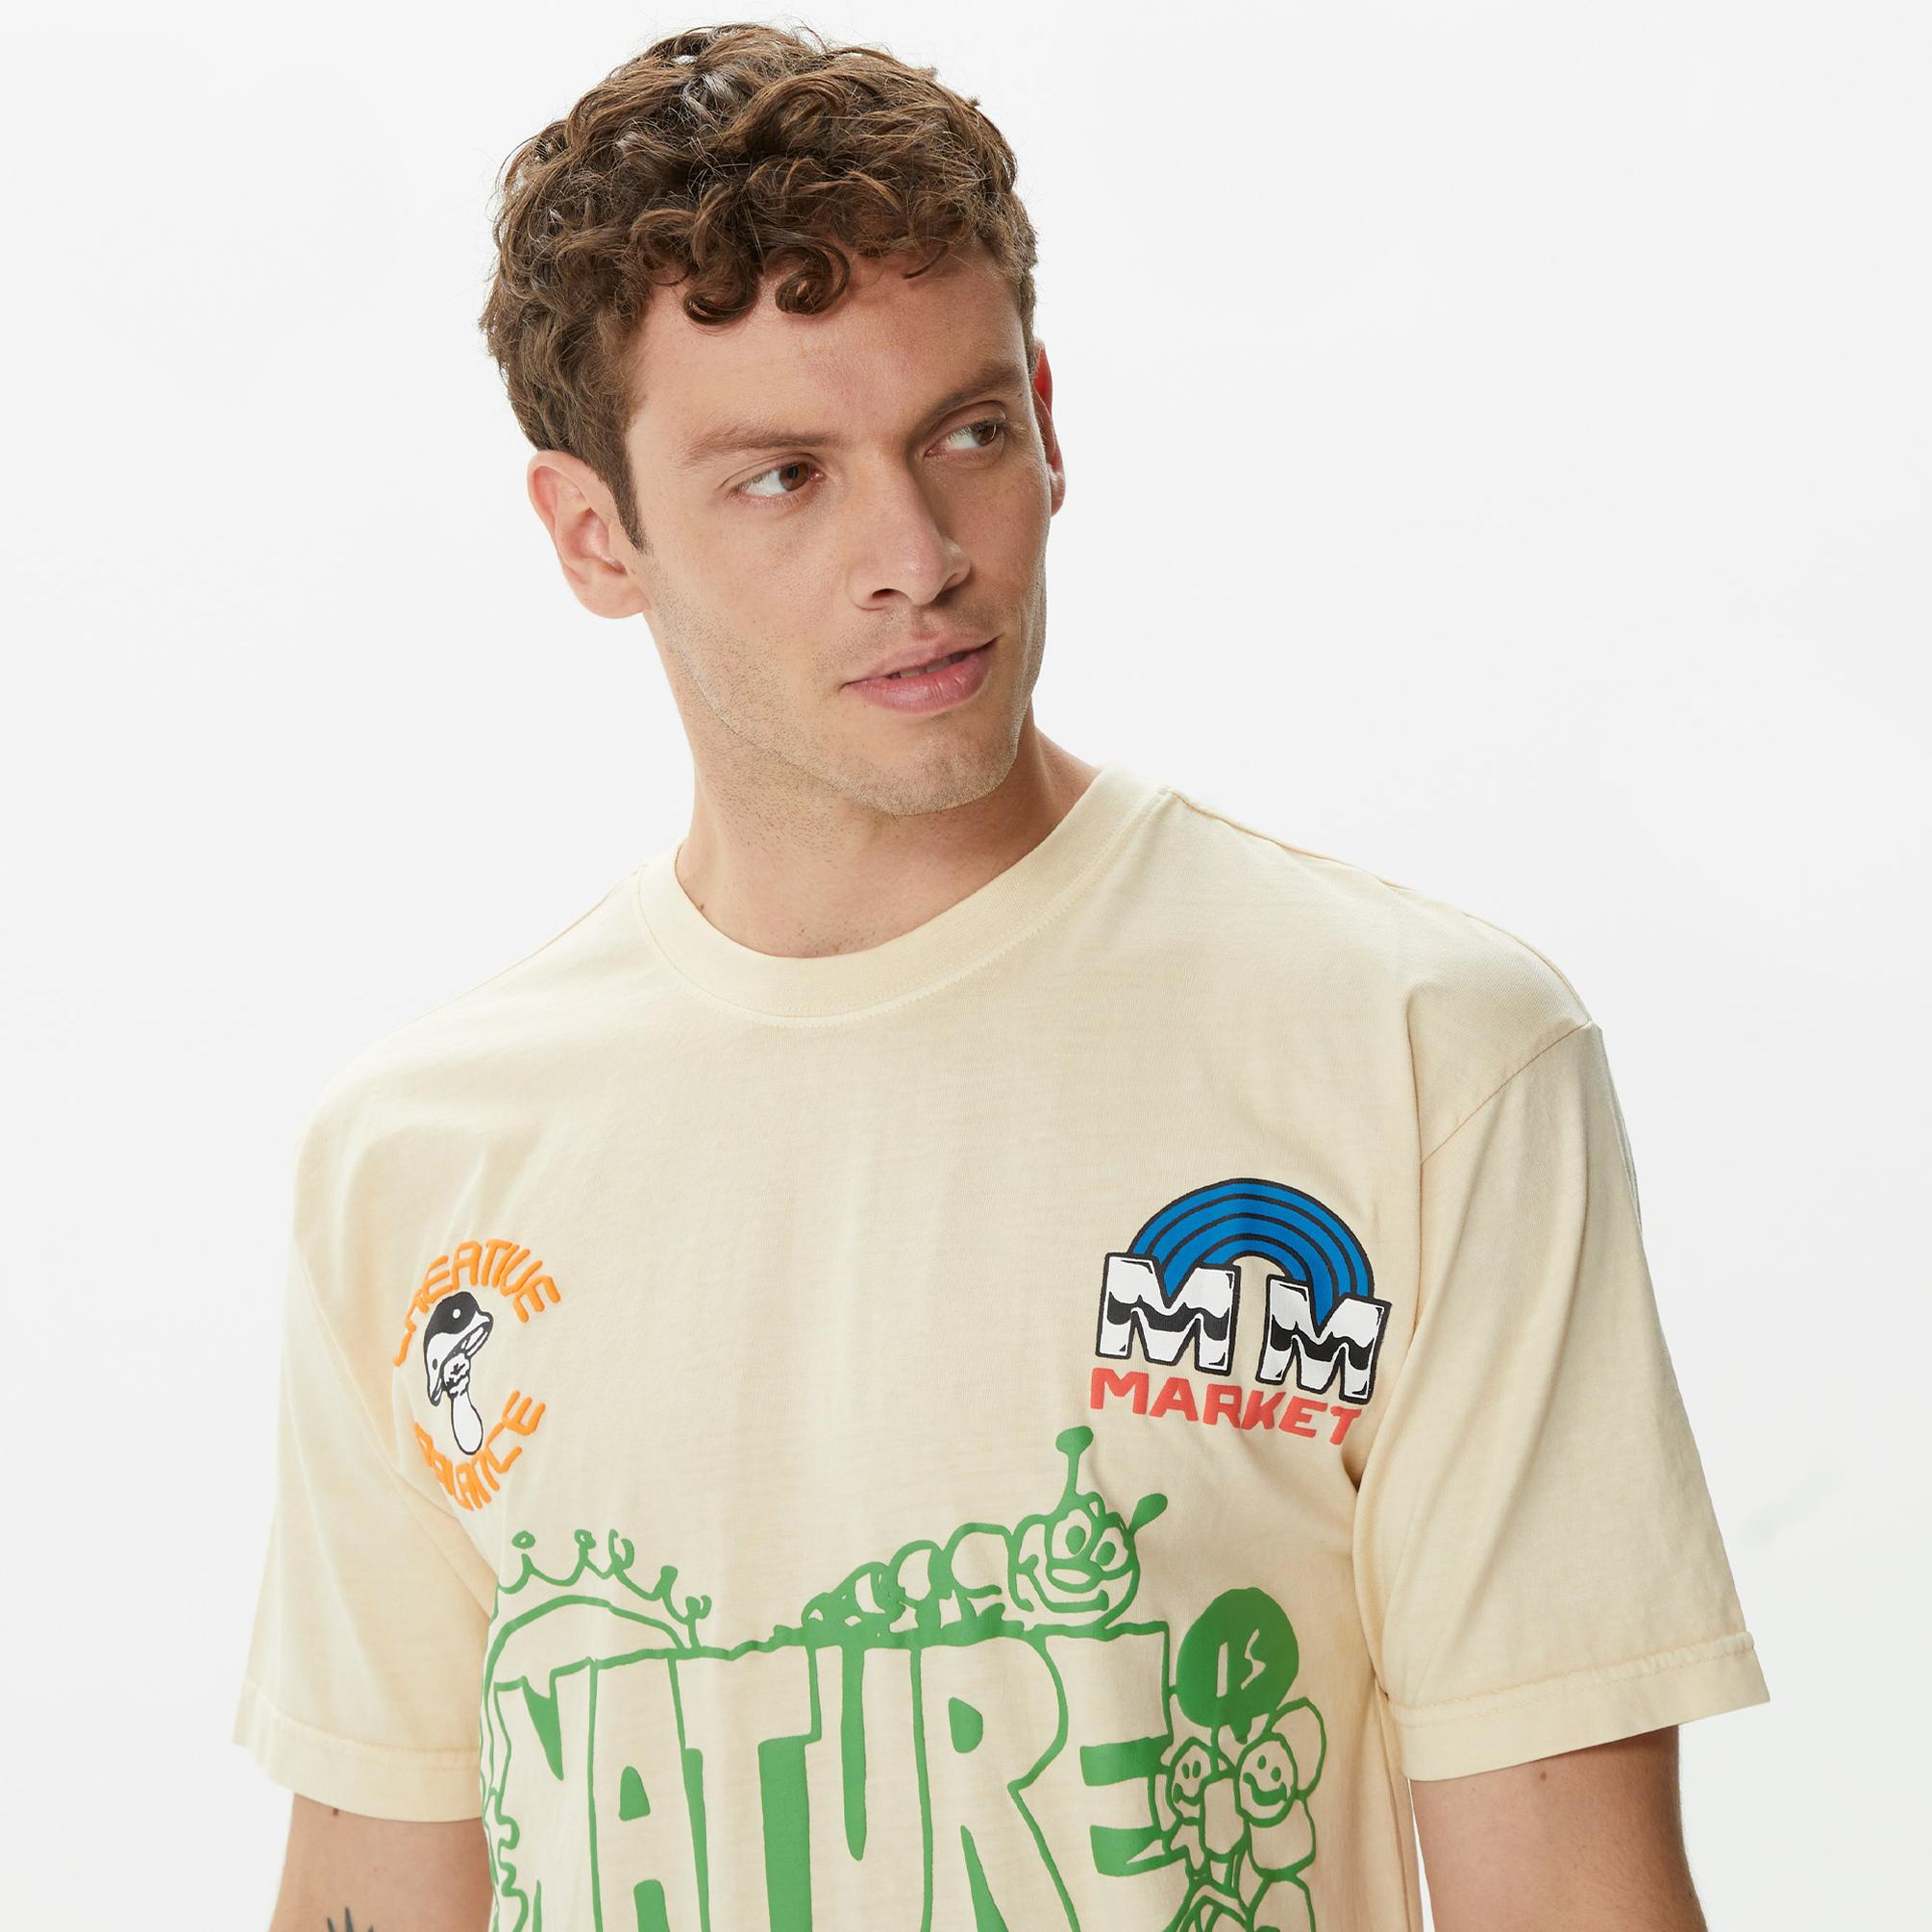  Market Nature Is Home Erkek Krem T-Shirt